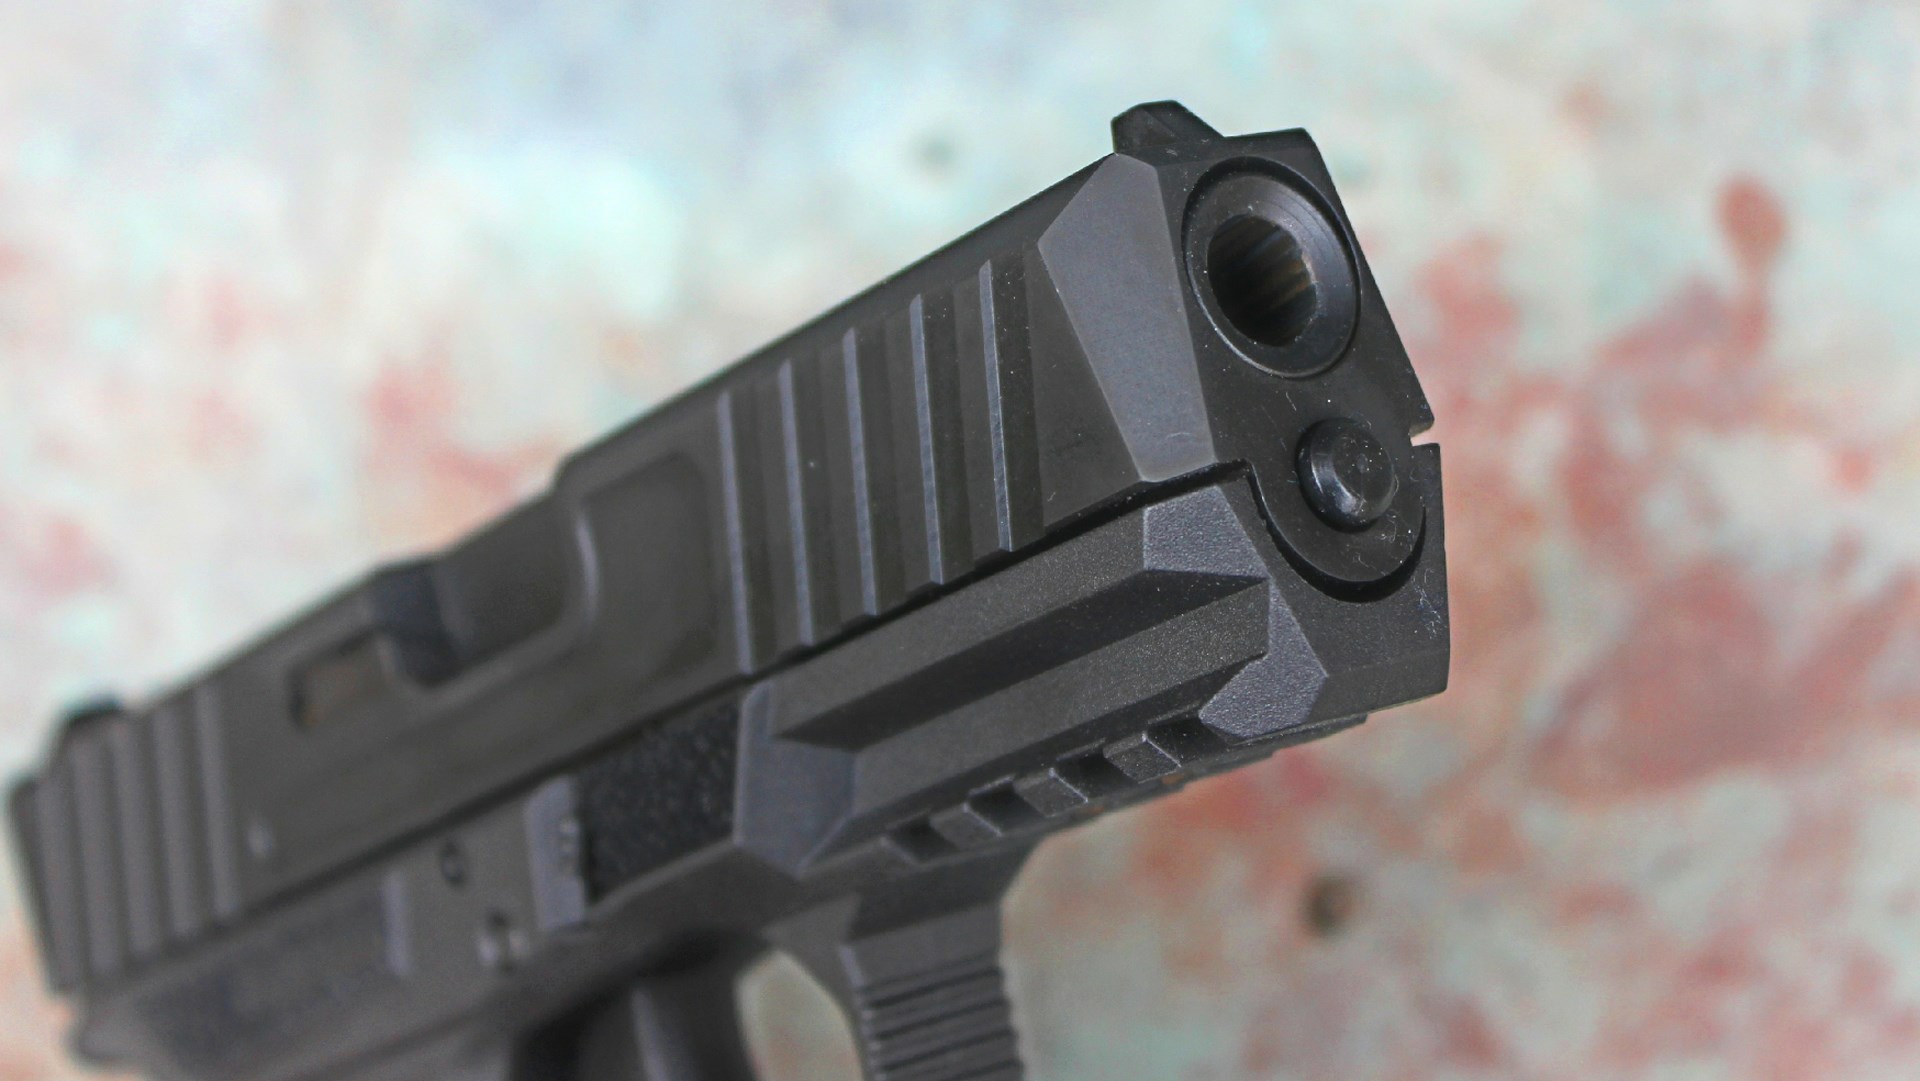 Kiger 9c pistol 9 mm barrel muzzle detail dynamic angle black metal hole rifling